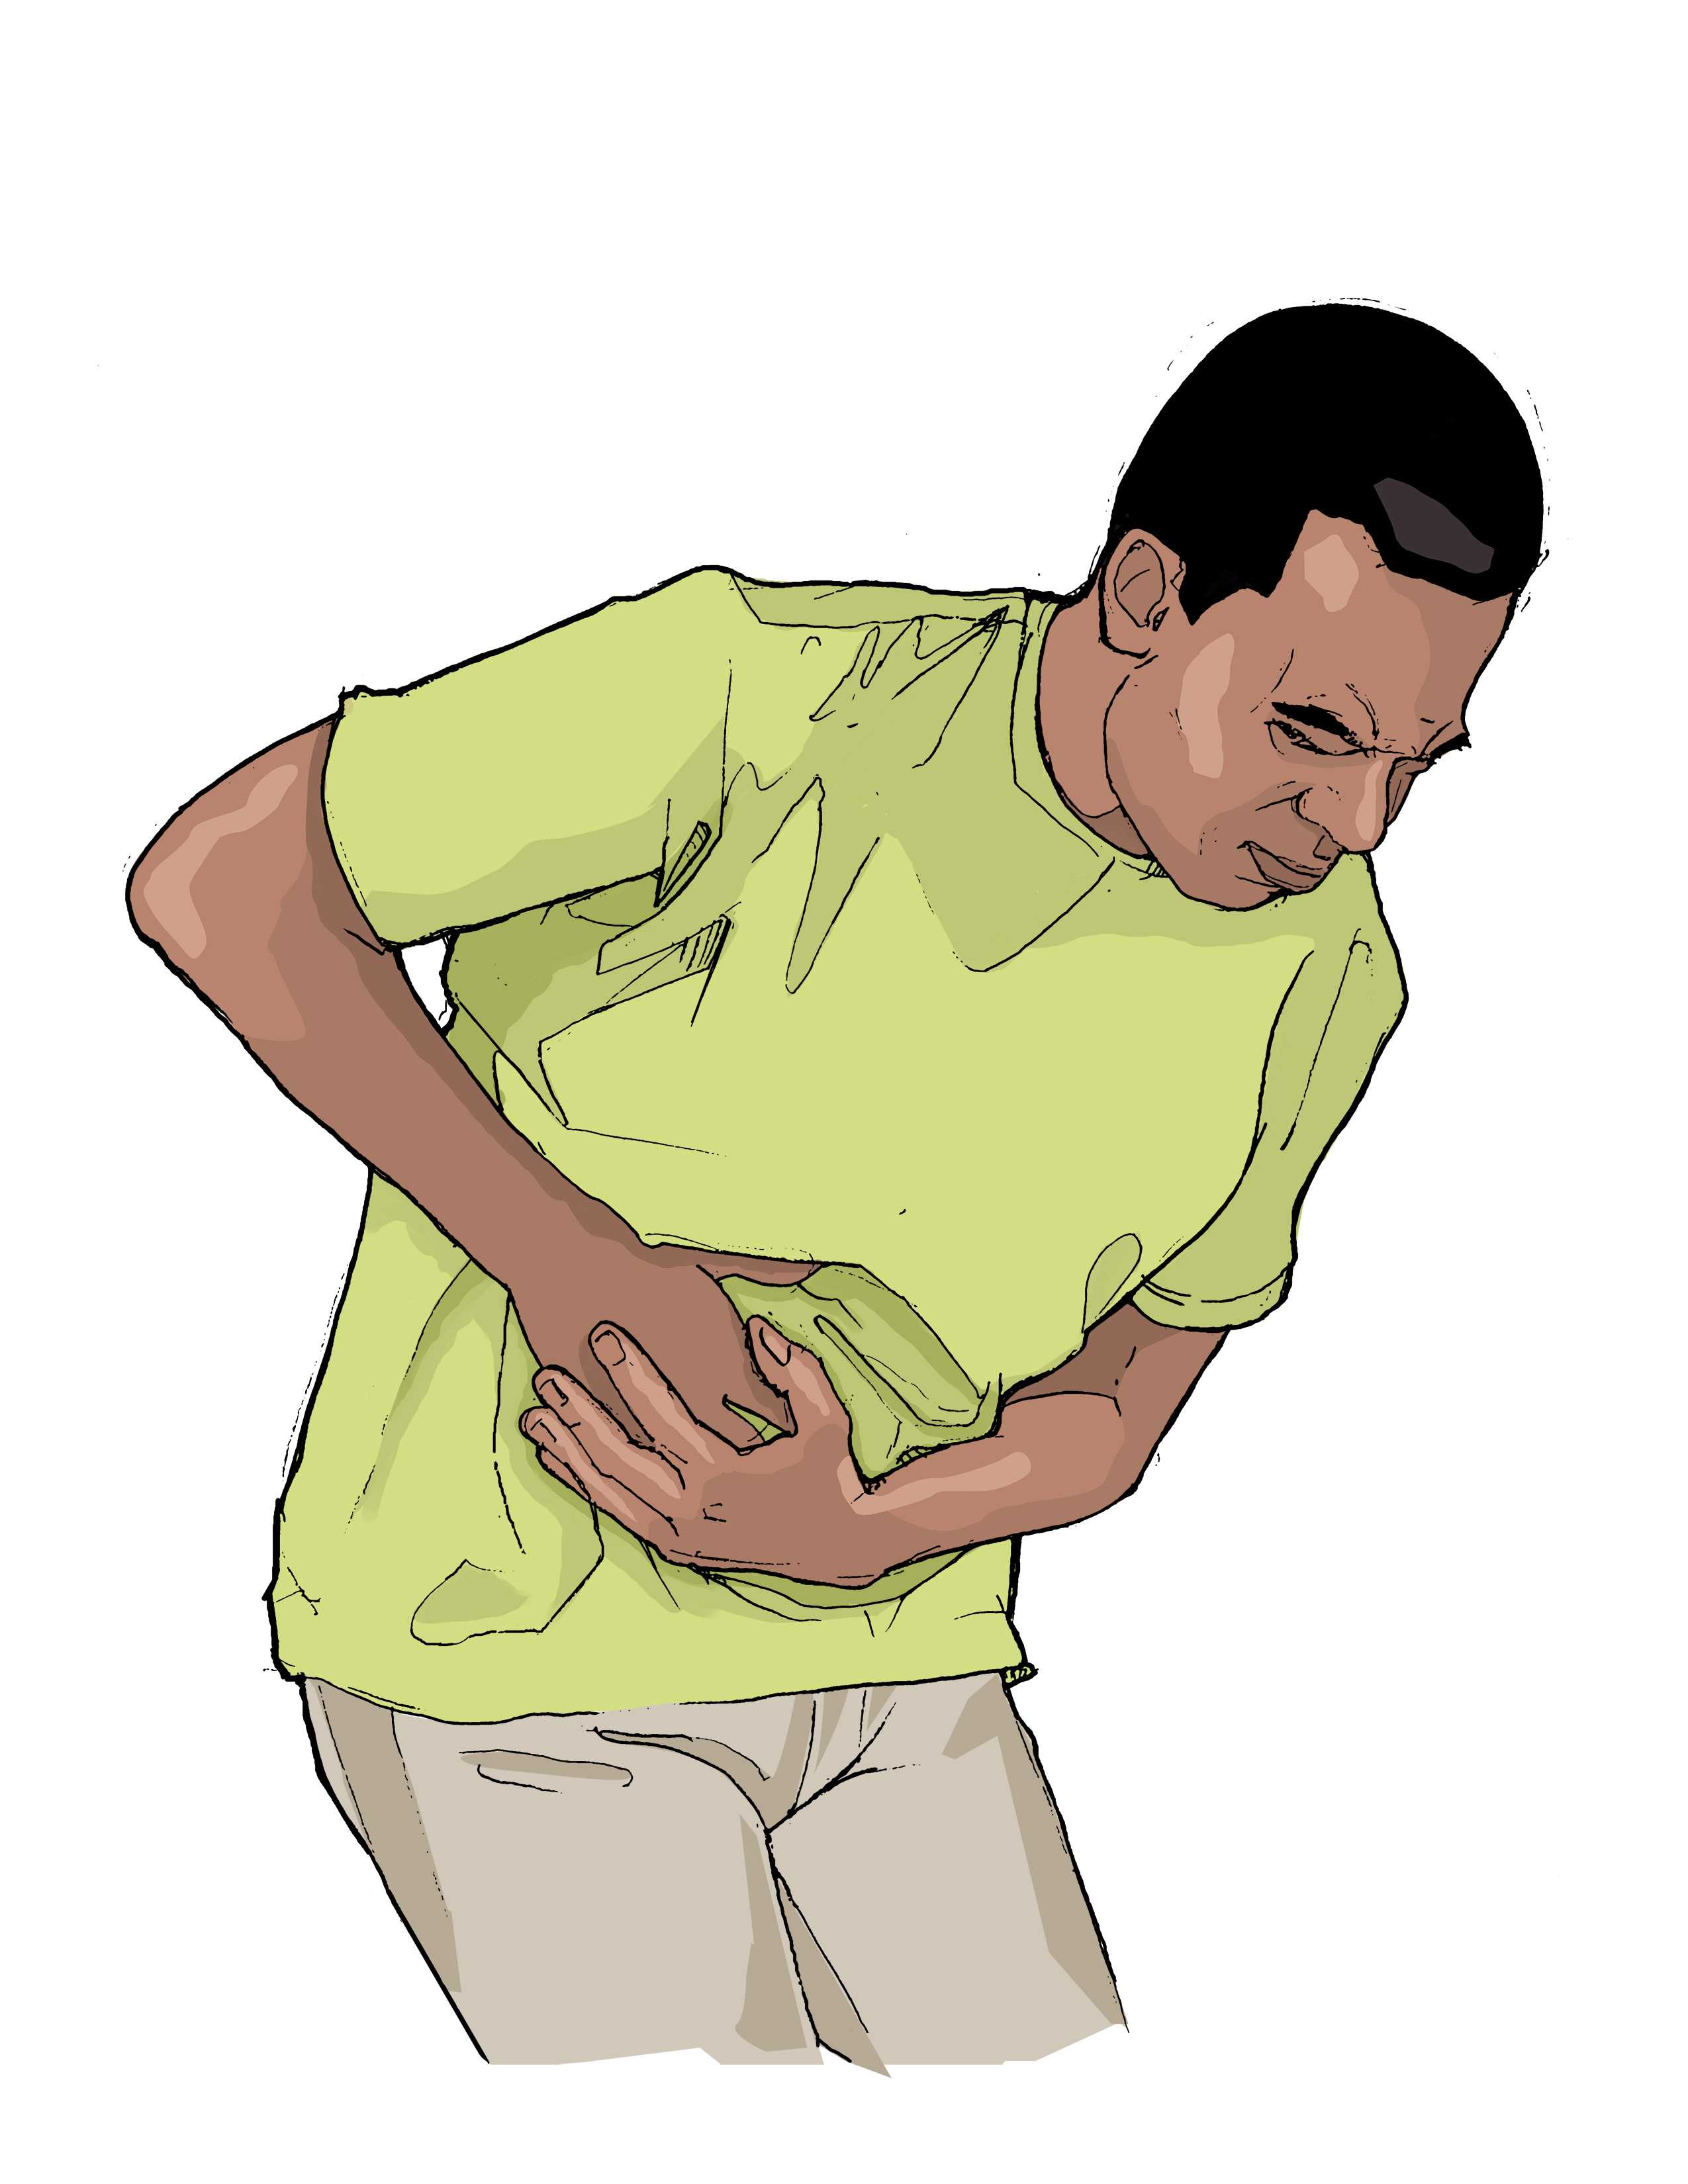 Ebola symptom: stomach pain